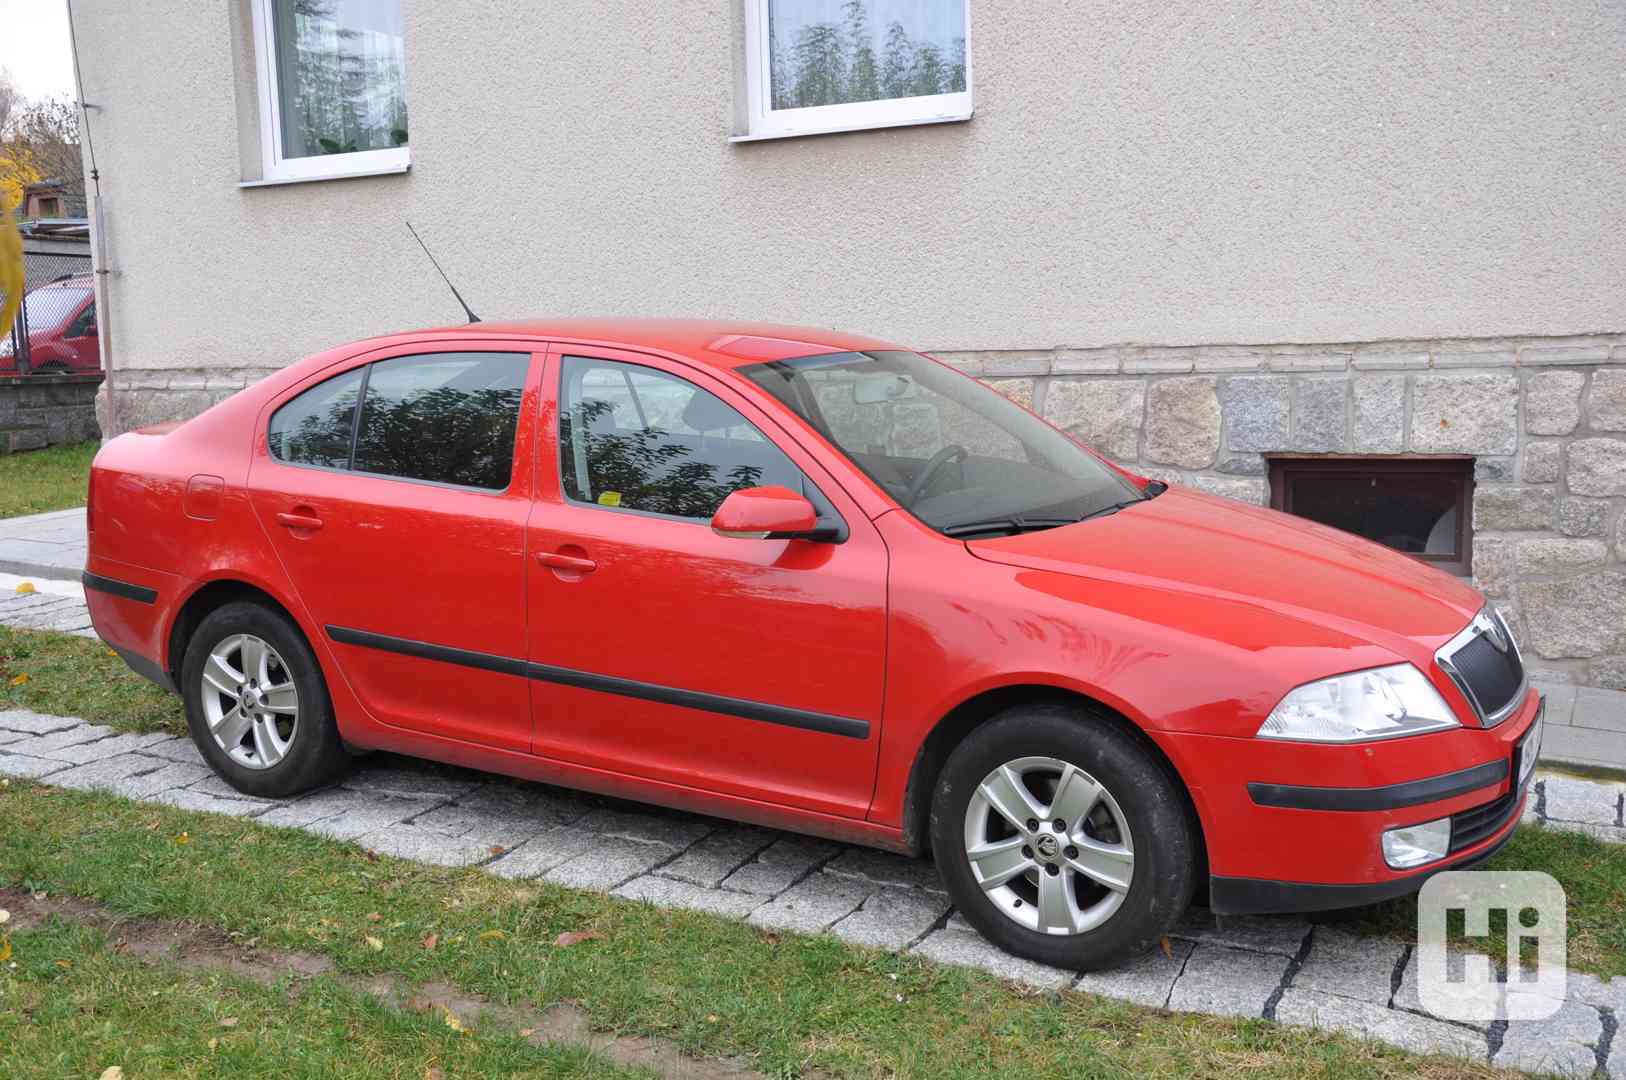  Škoda Octavia II, 1.6 MPi, rok 2006 - foto 1